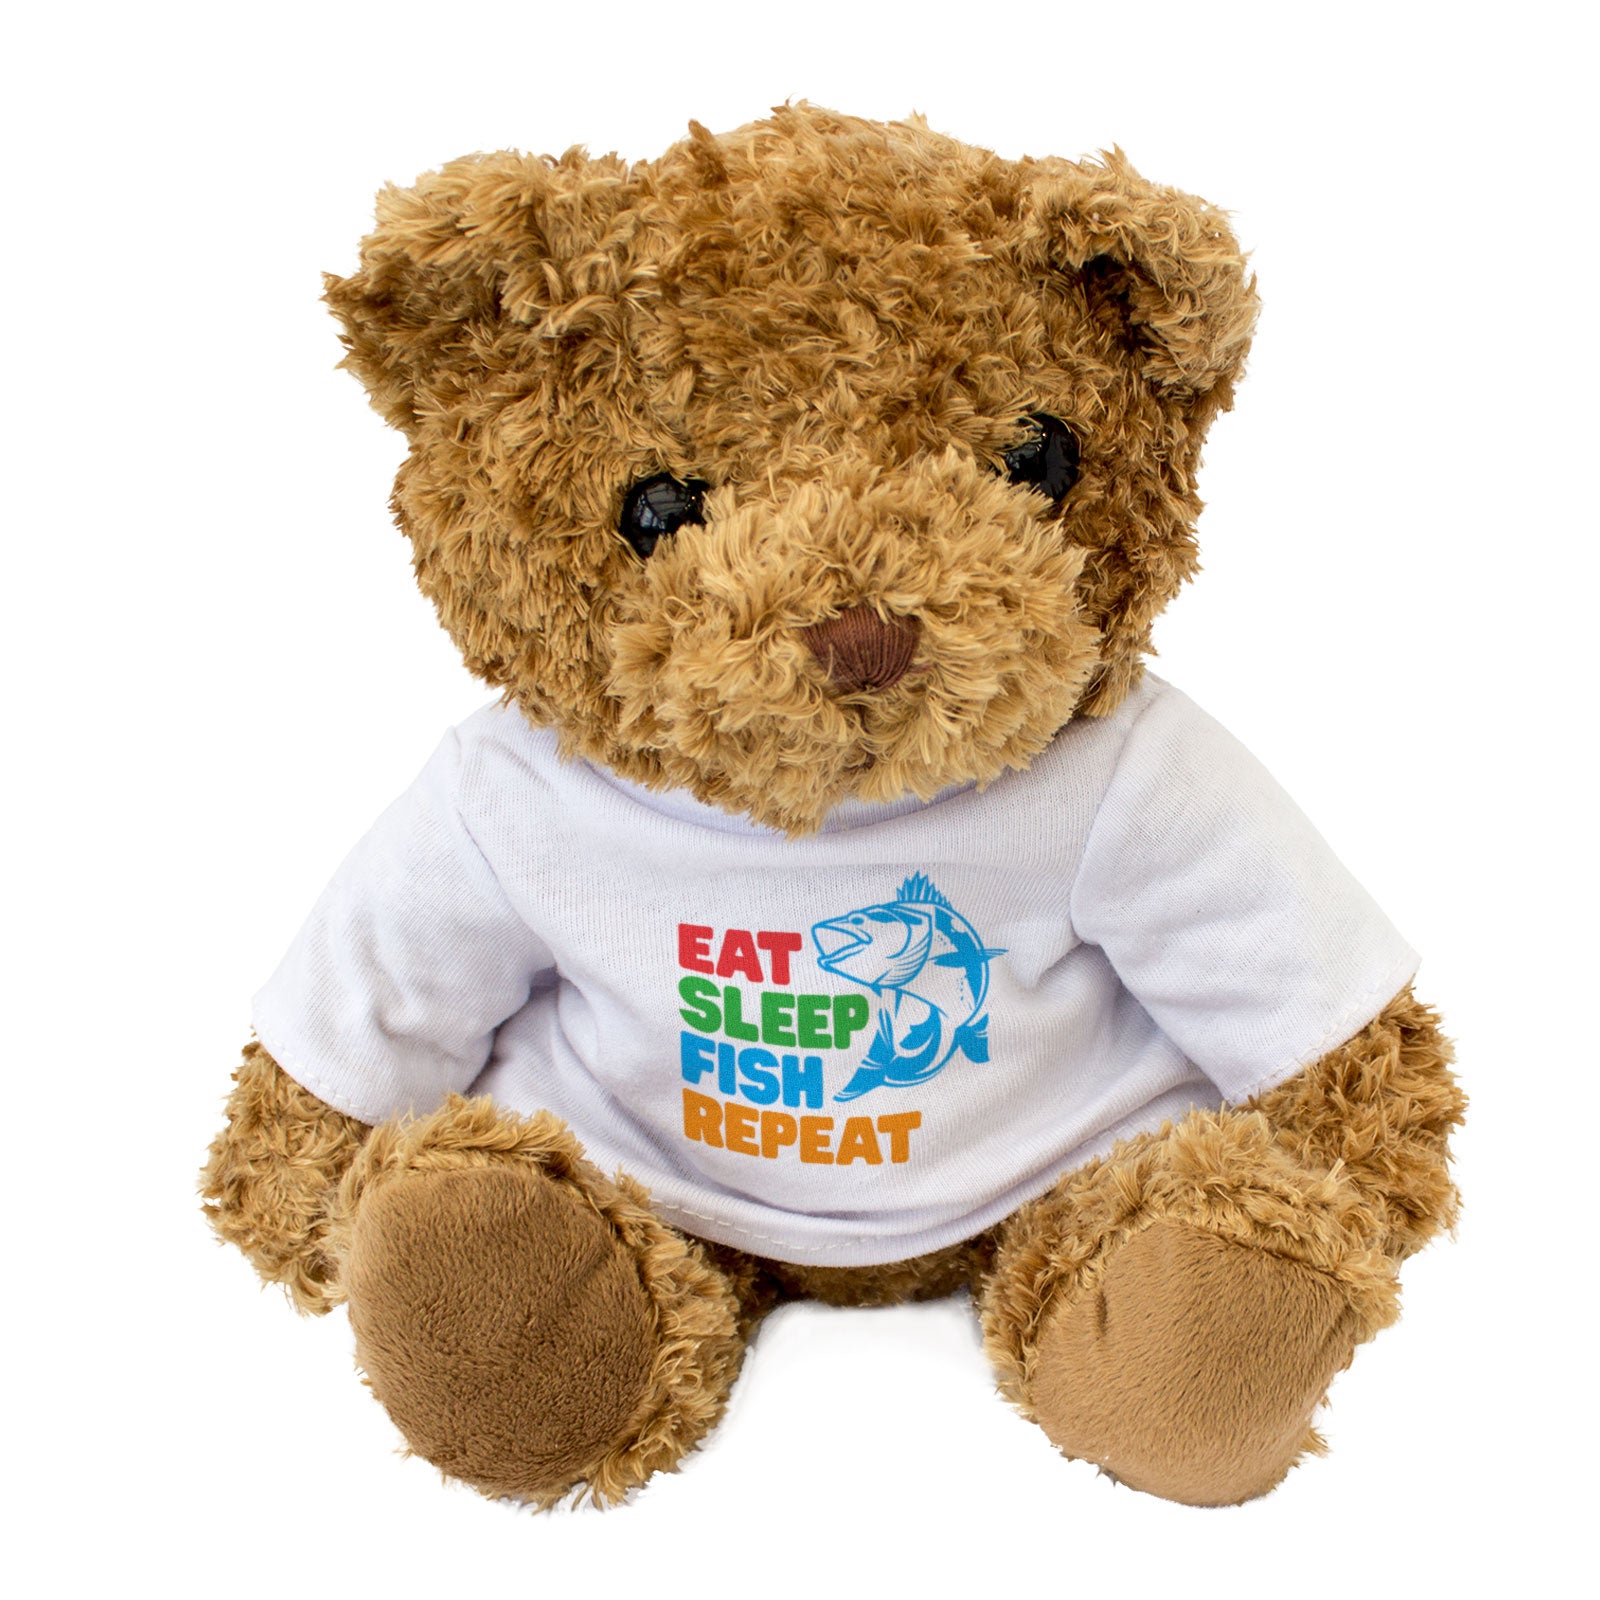 Eat Sleep Fish Repeat - Teddy Bear